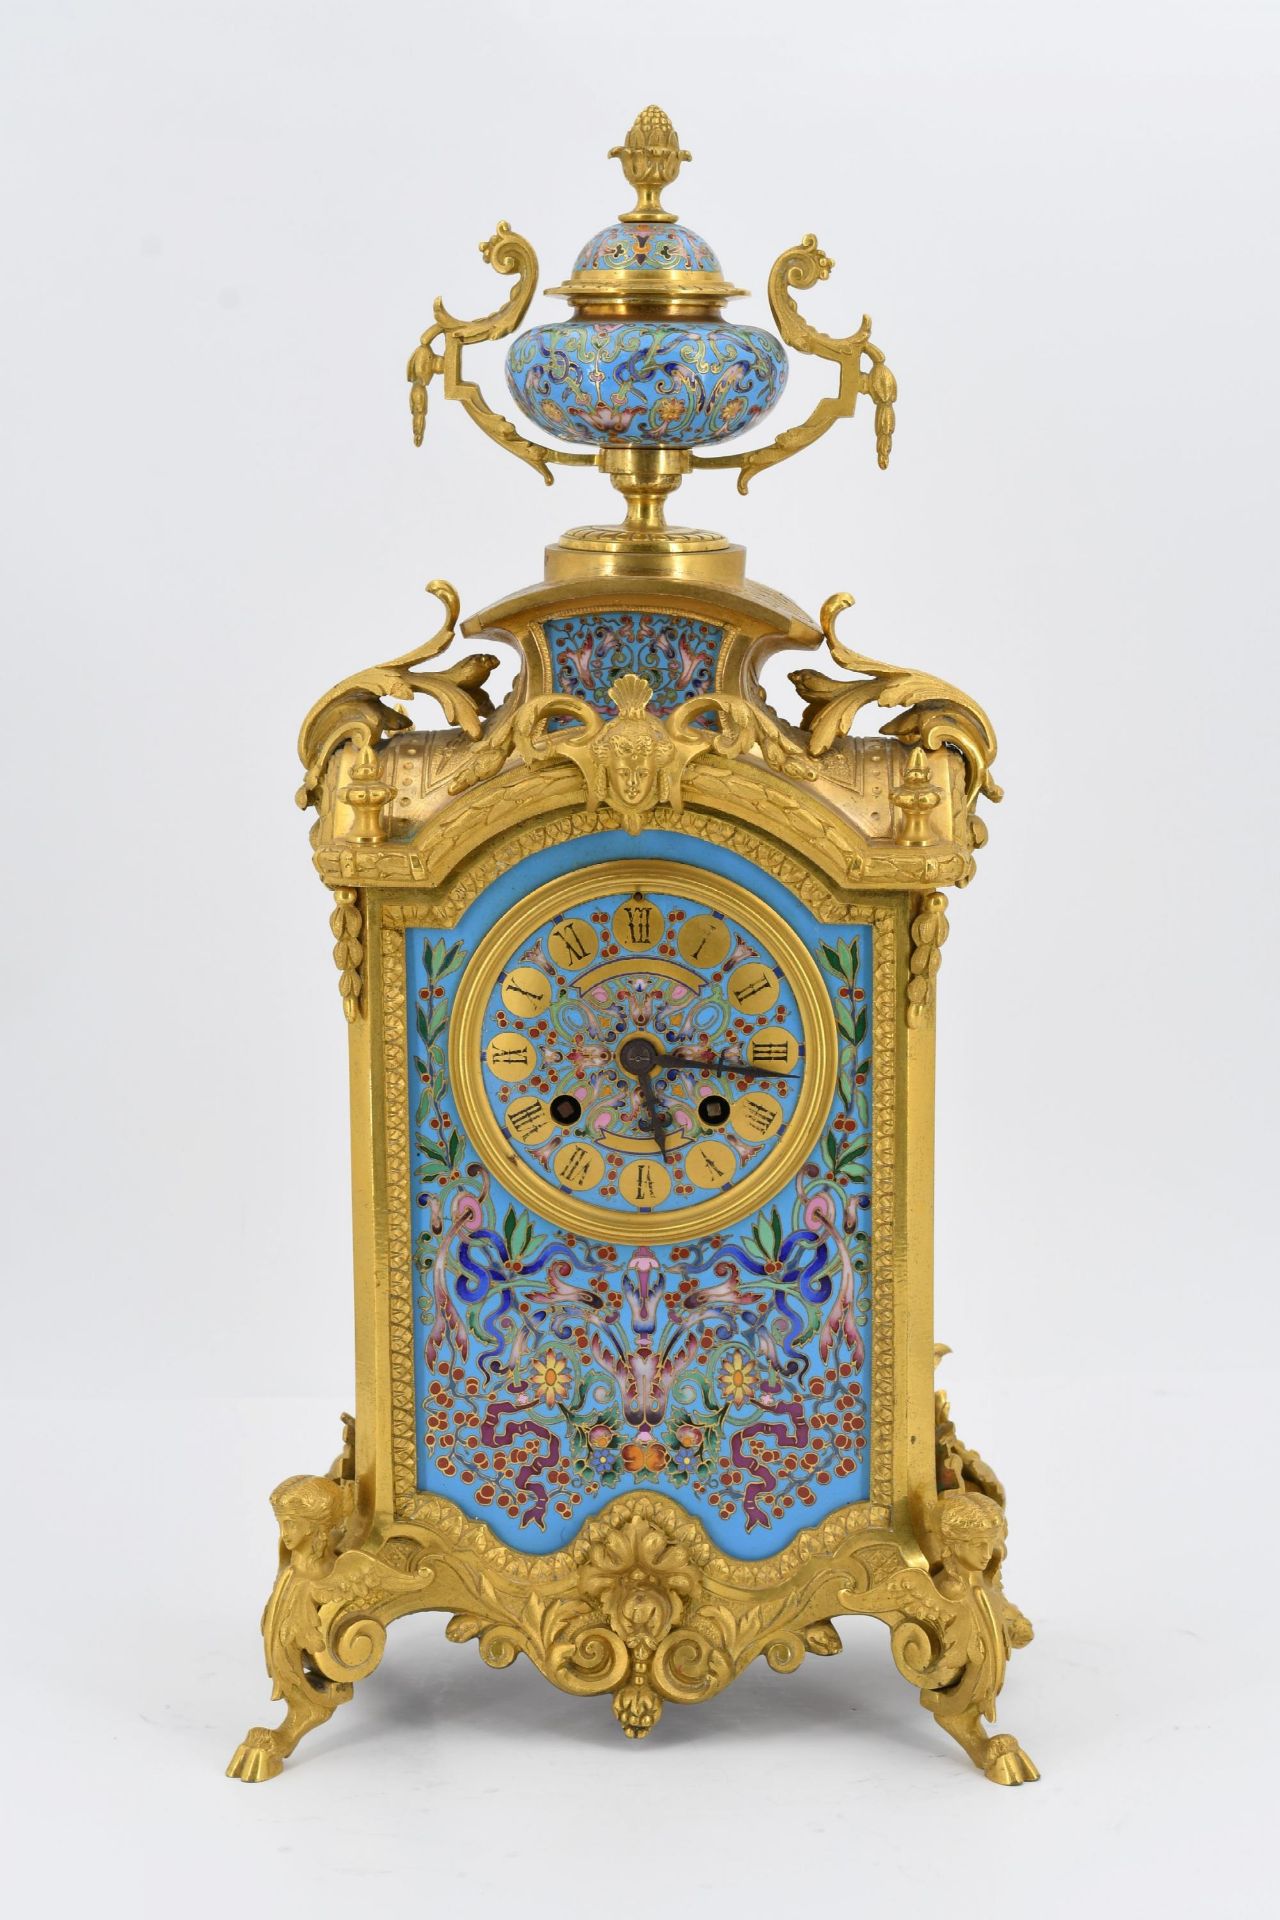 Pendulum clock with floral enamel décor - Image 2 of 5